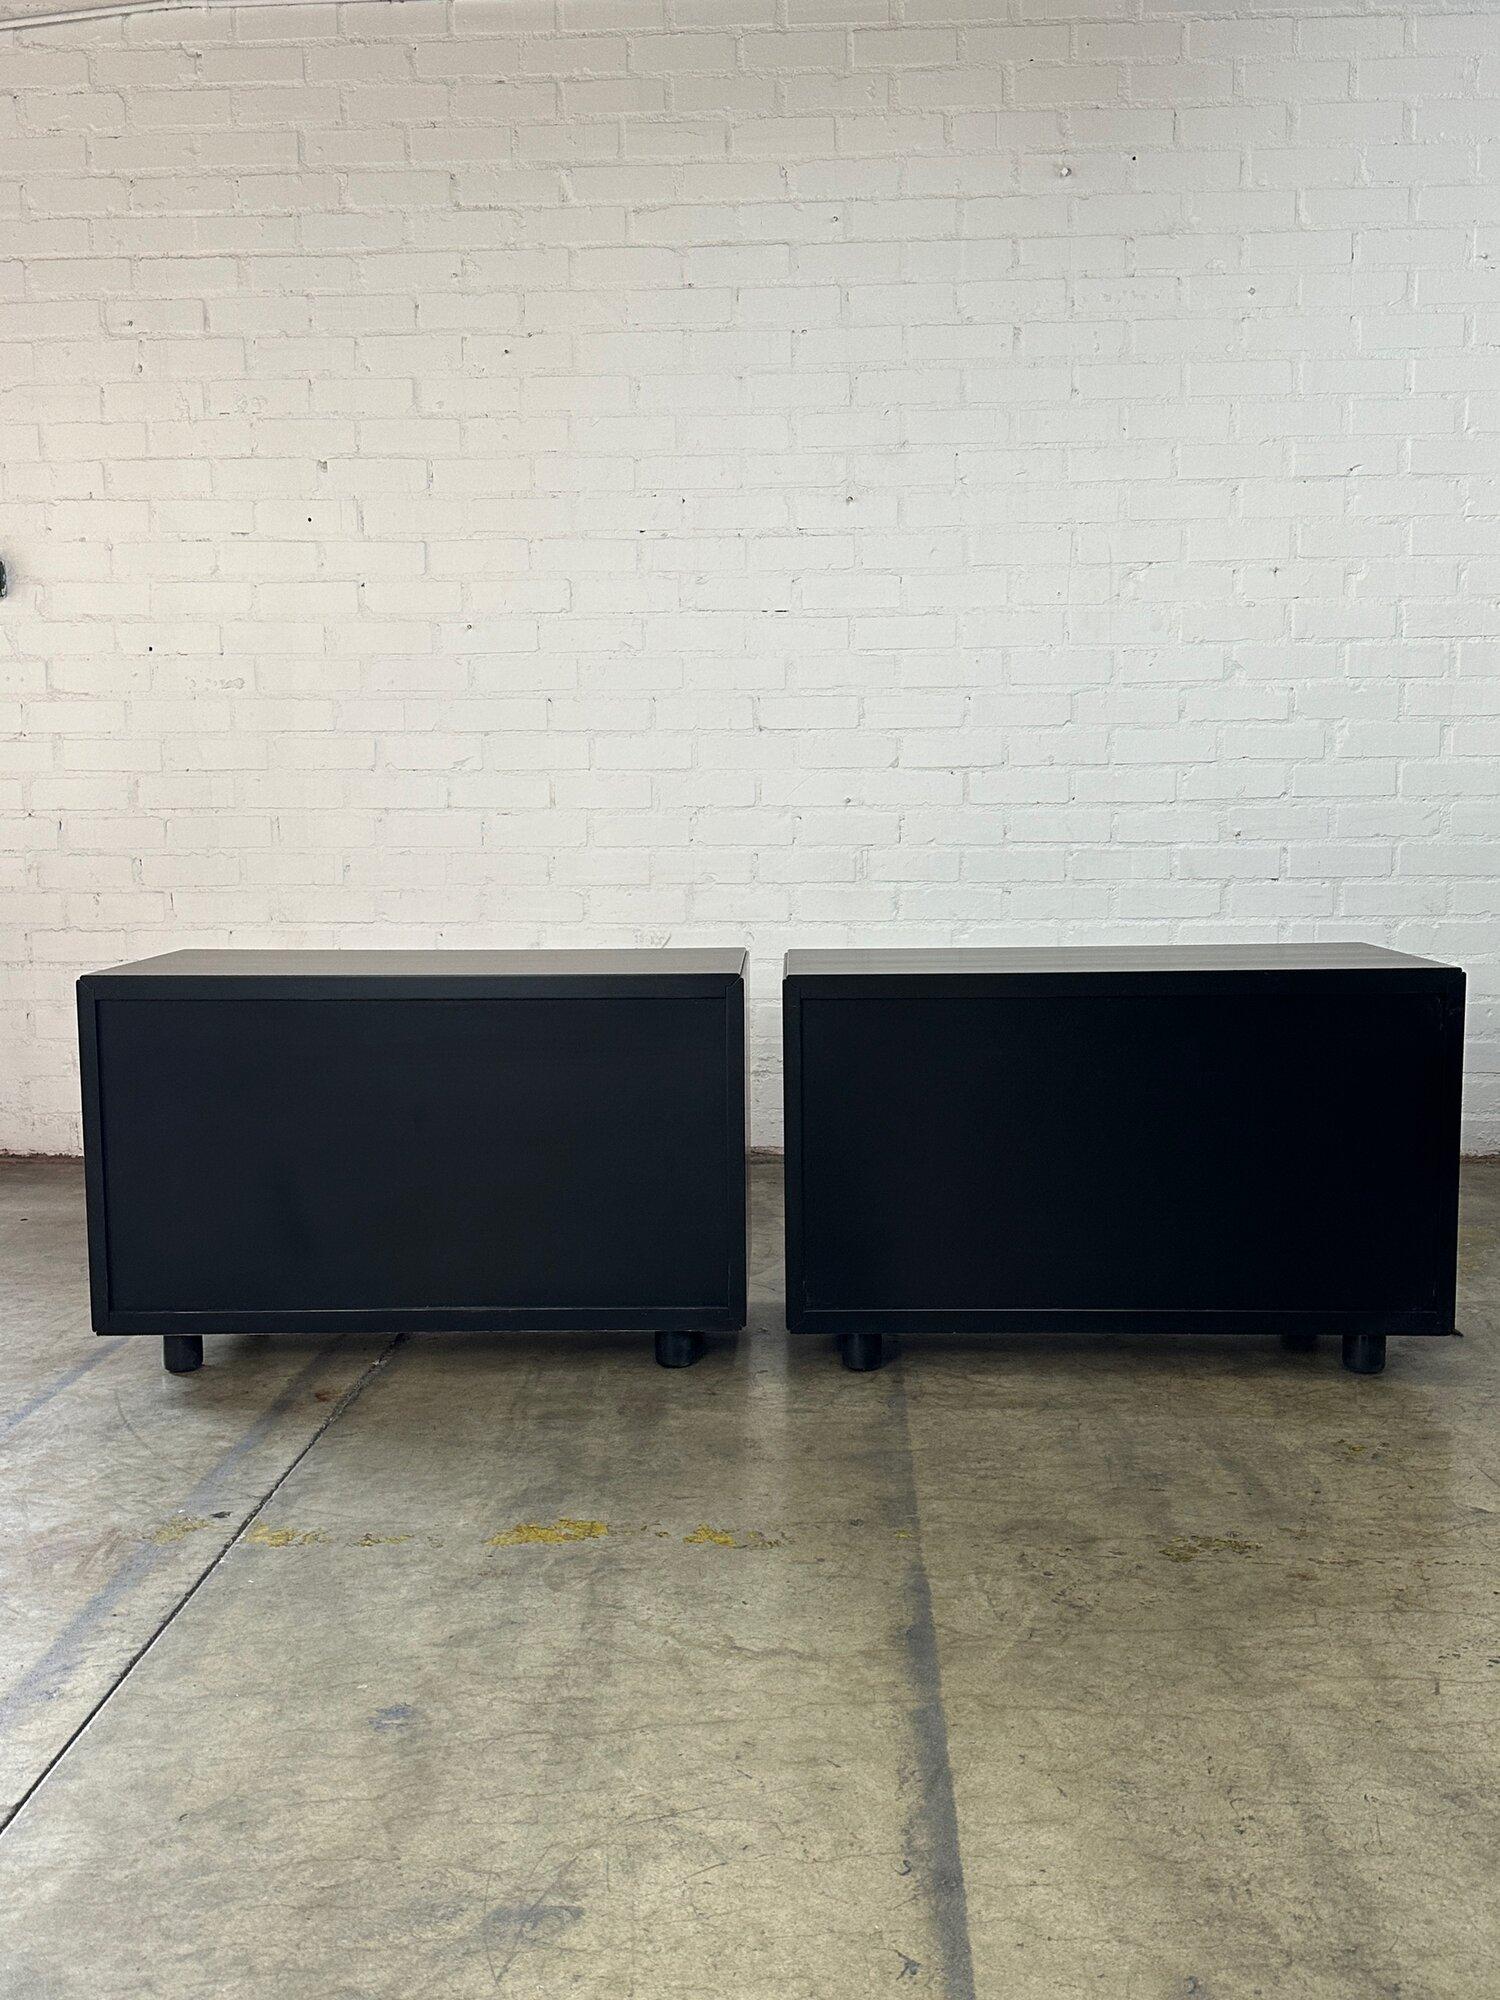 Postmoderne schwarz lackierte, kompakte Kommode – separat verkauft im Angebot 3